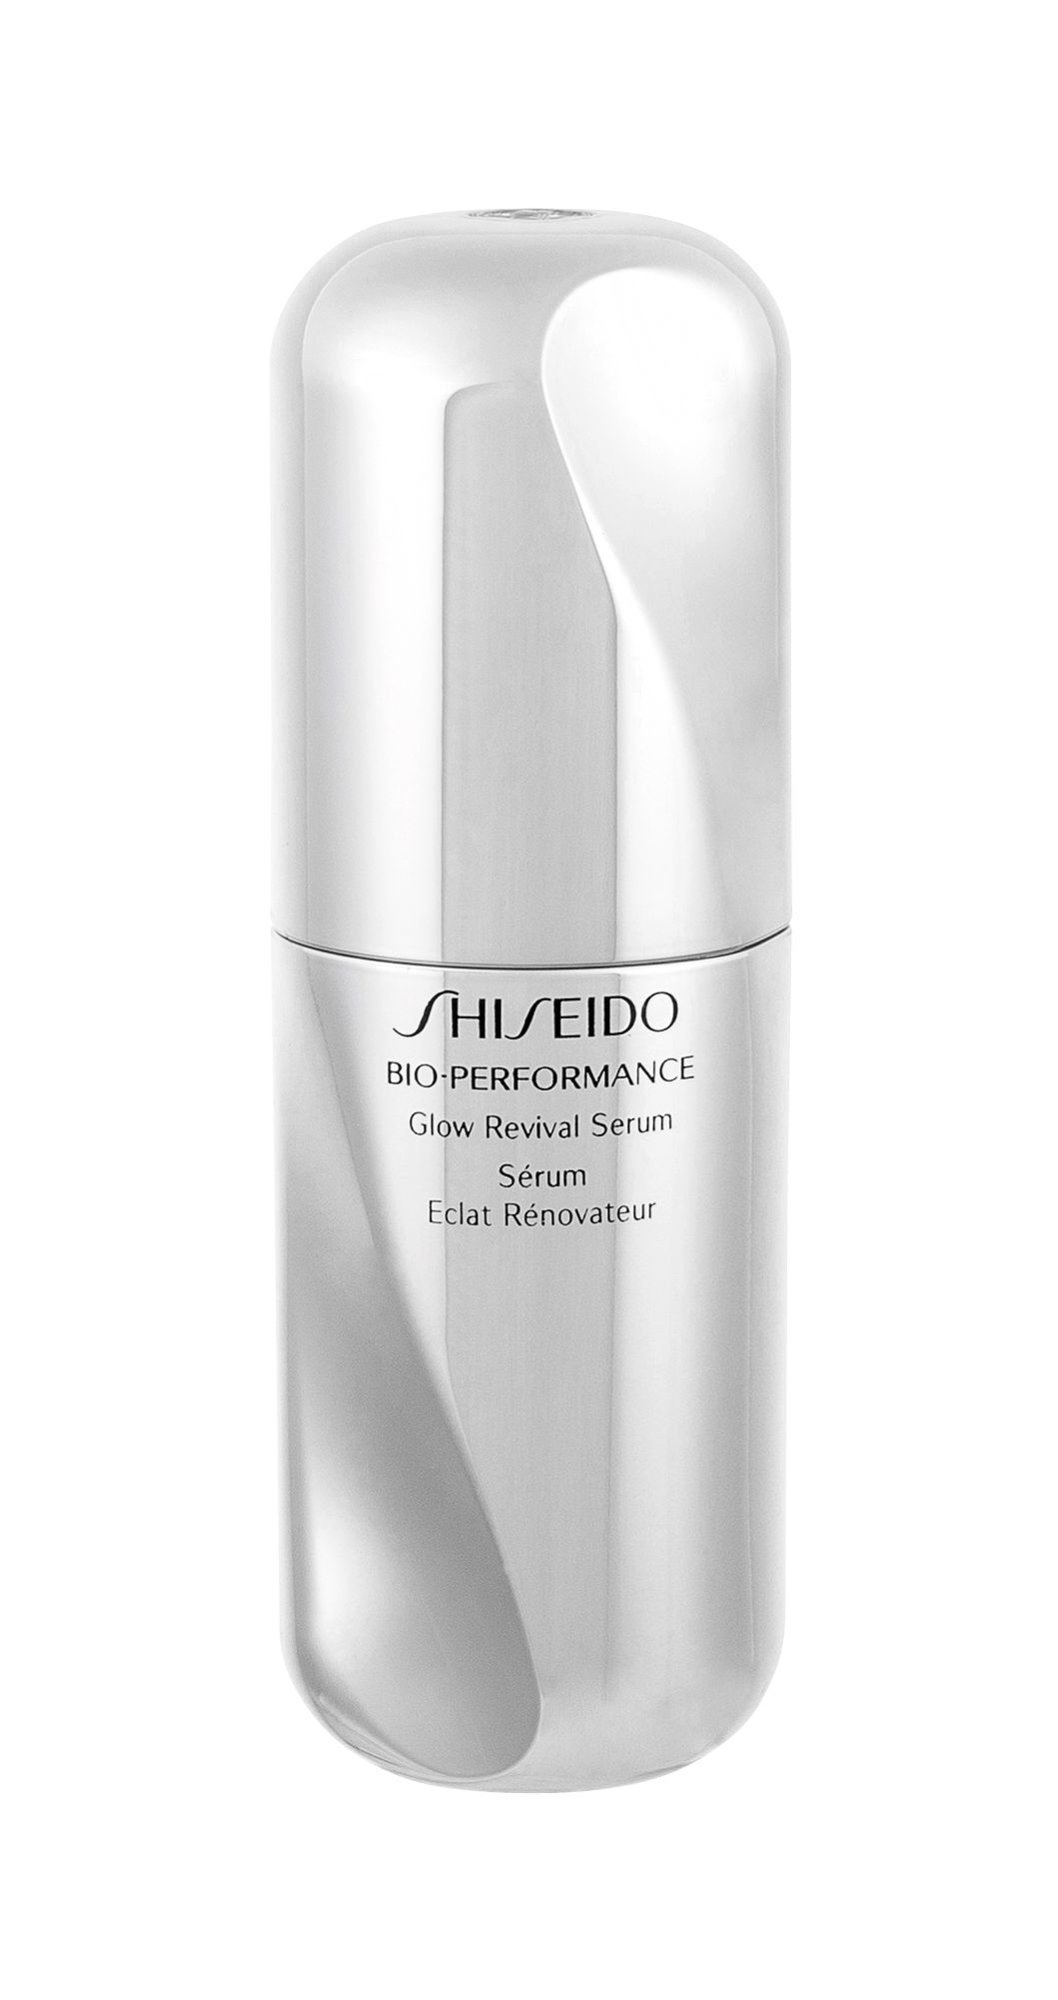 Shiseido BIO-PERFORMANCE Glow Revival Serum